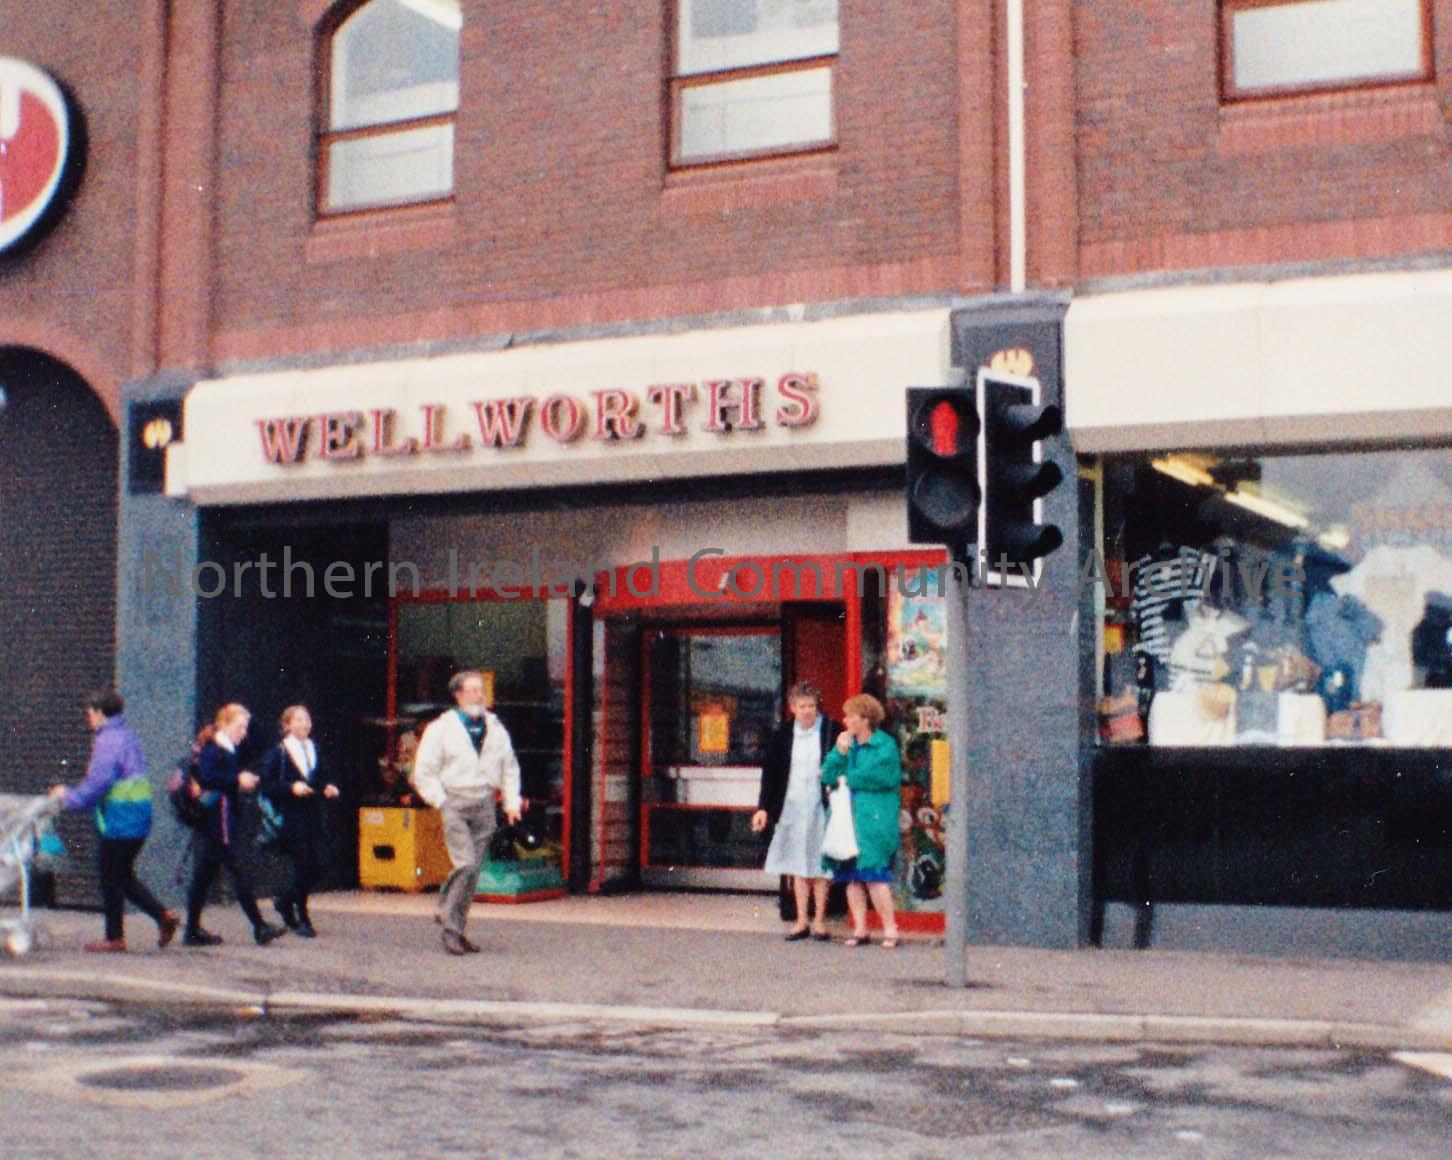 Wellworth’s, Irish Green Street